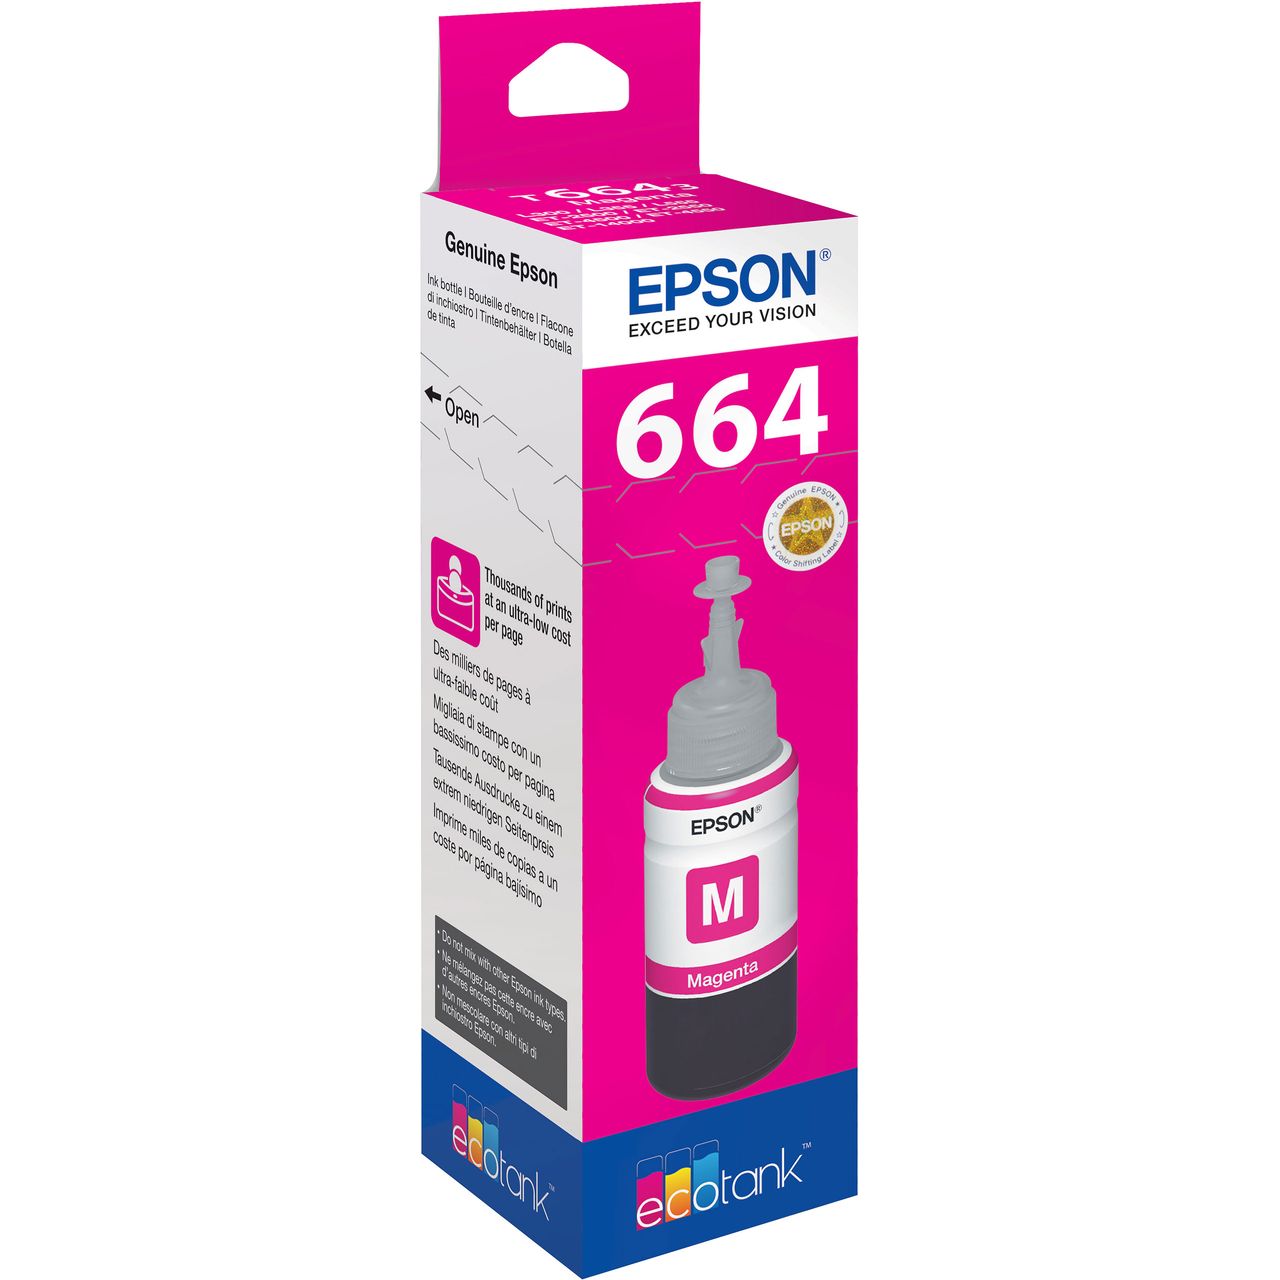 Epson EcoTank Magenta Ink Review